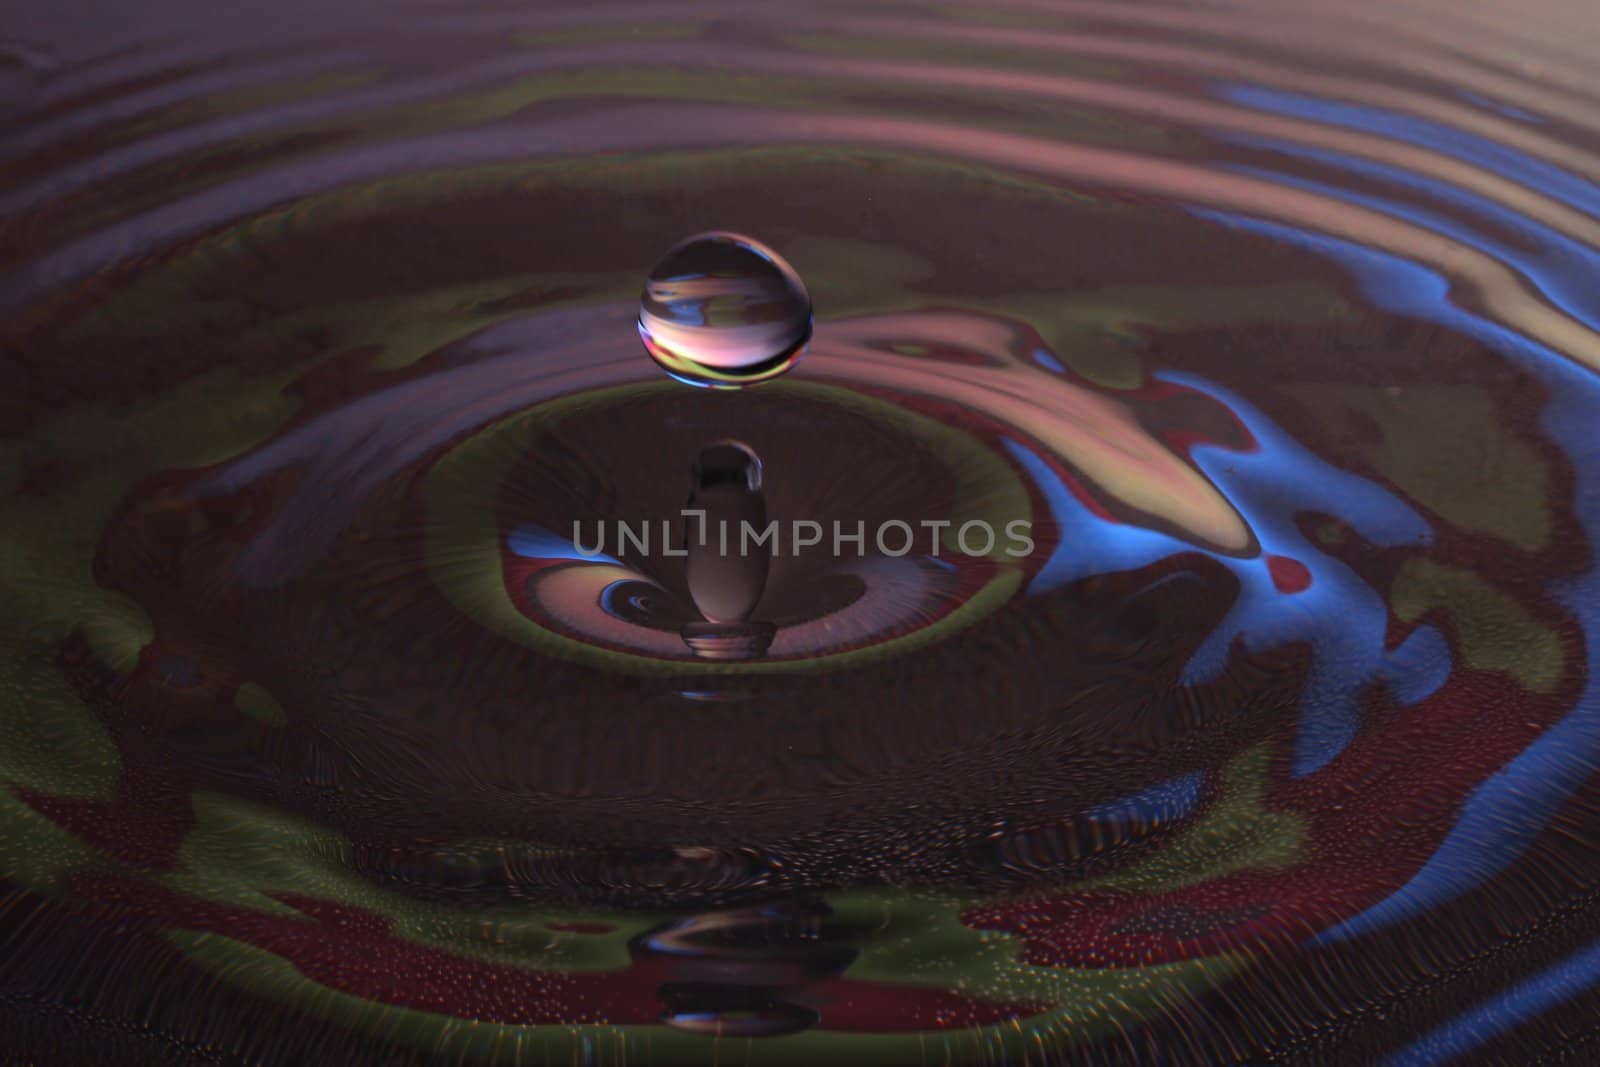 great colourful water drop macro shot by Teka77